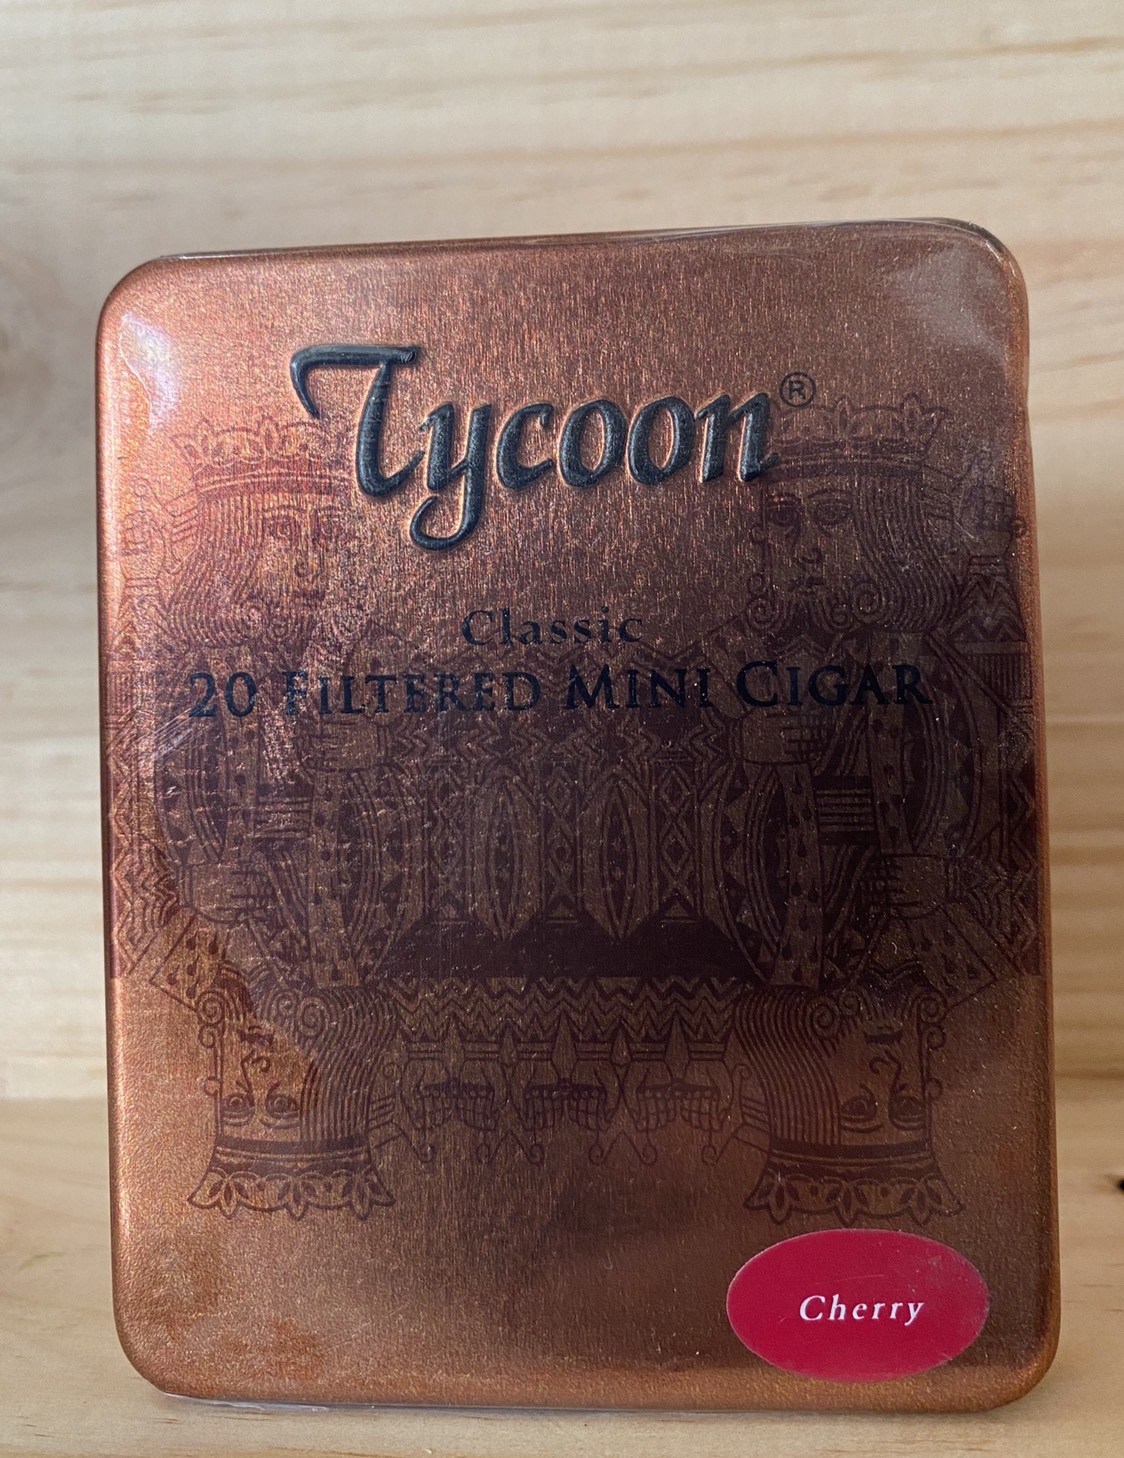 Tycoon Cherry (Mini Cigar)